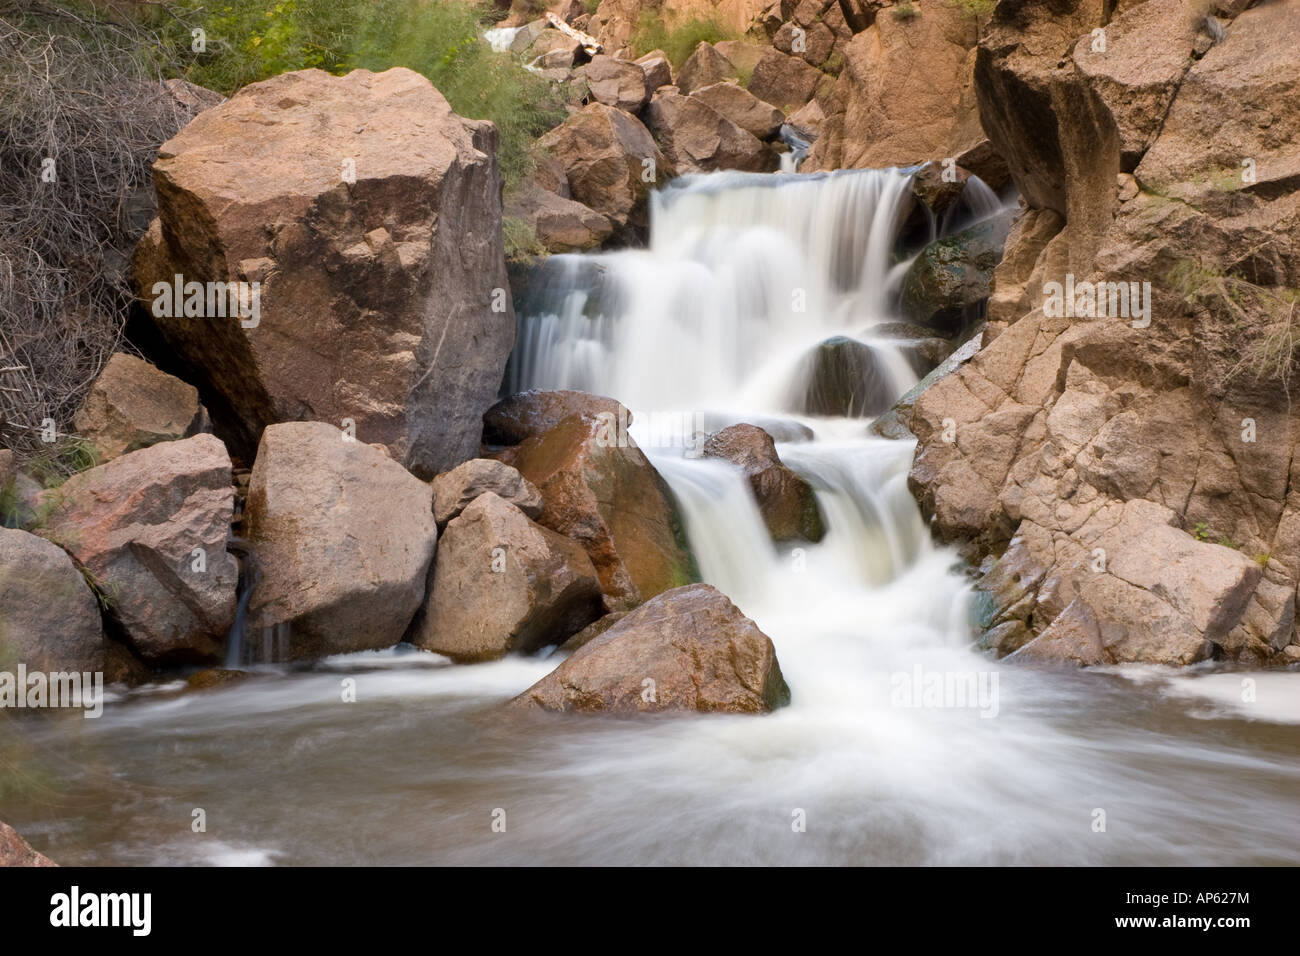 Cascada nuevo mexico fotografías e imágenes de alta resolución - Alamy